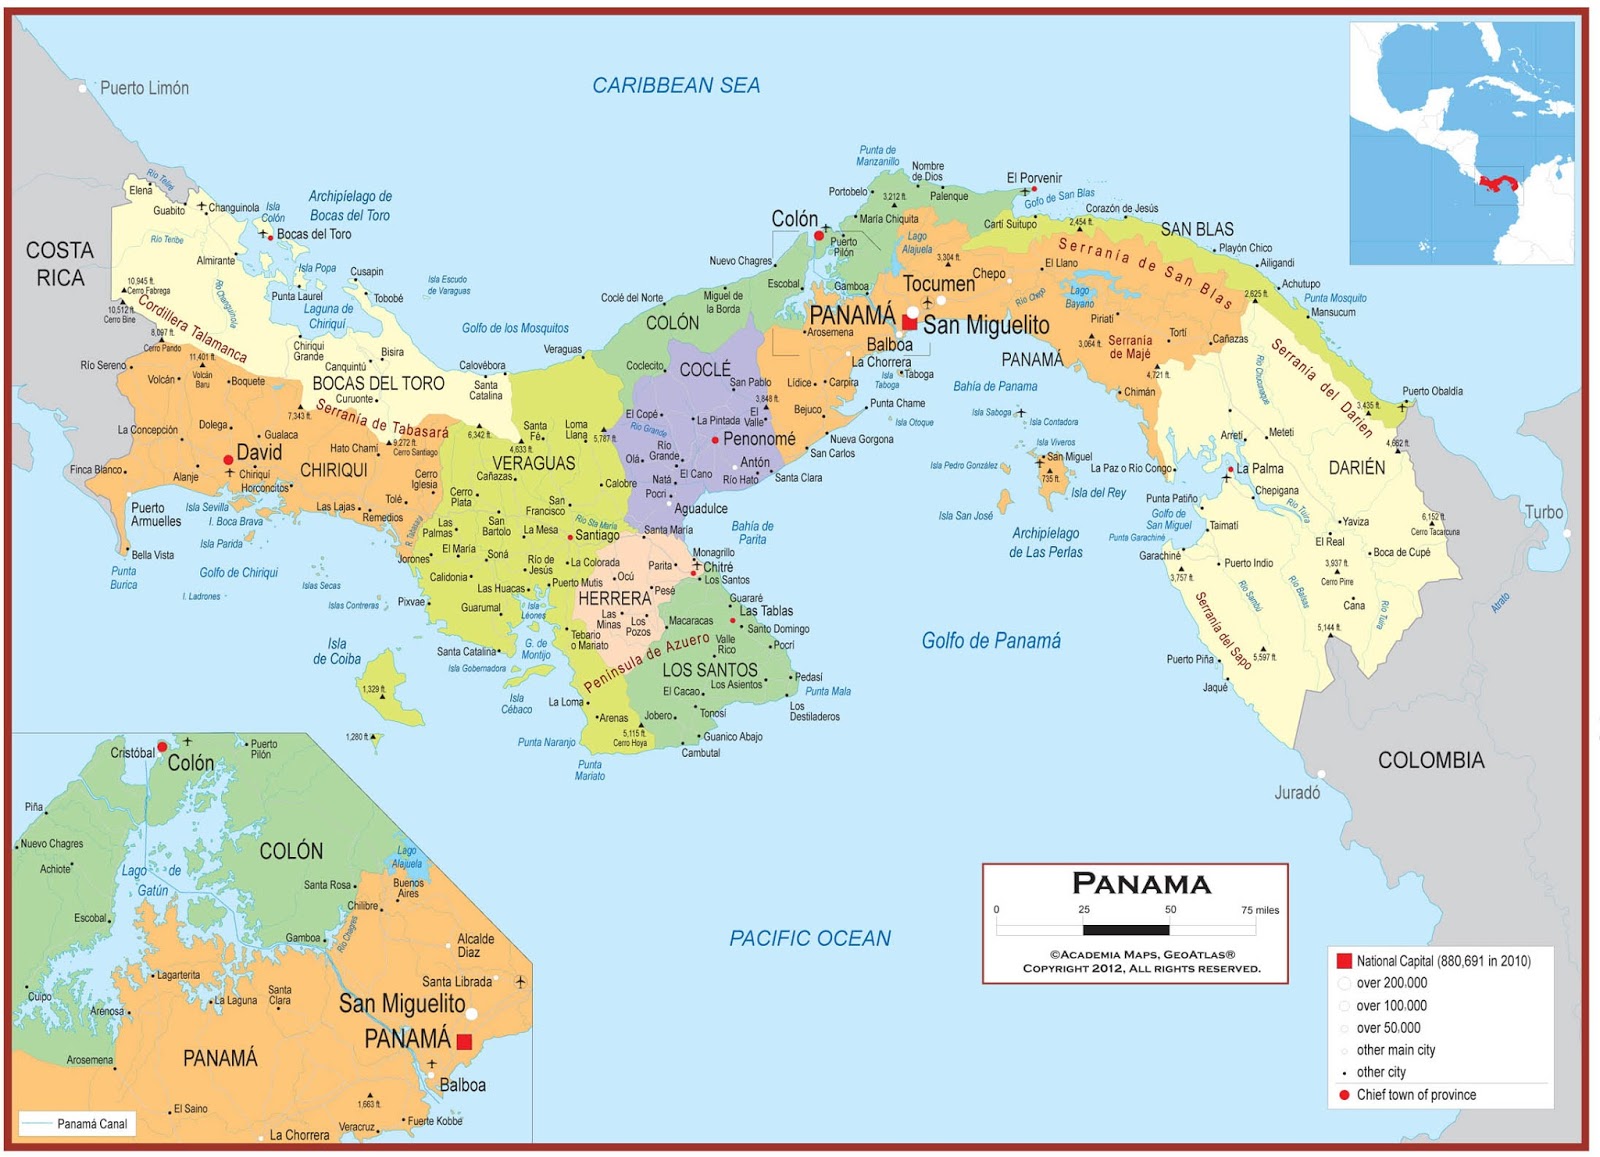 Mapas do Panamá - MapasBlog